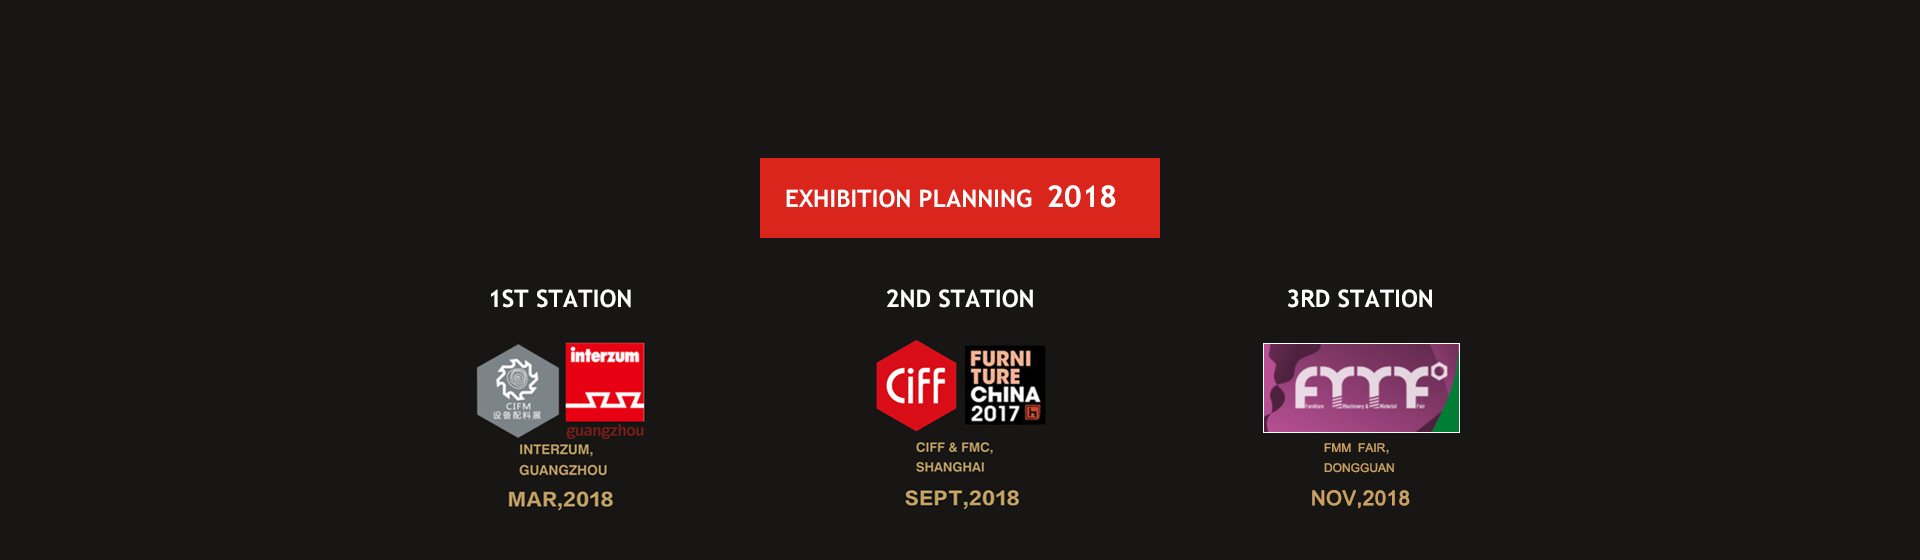 exhibition planning